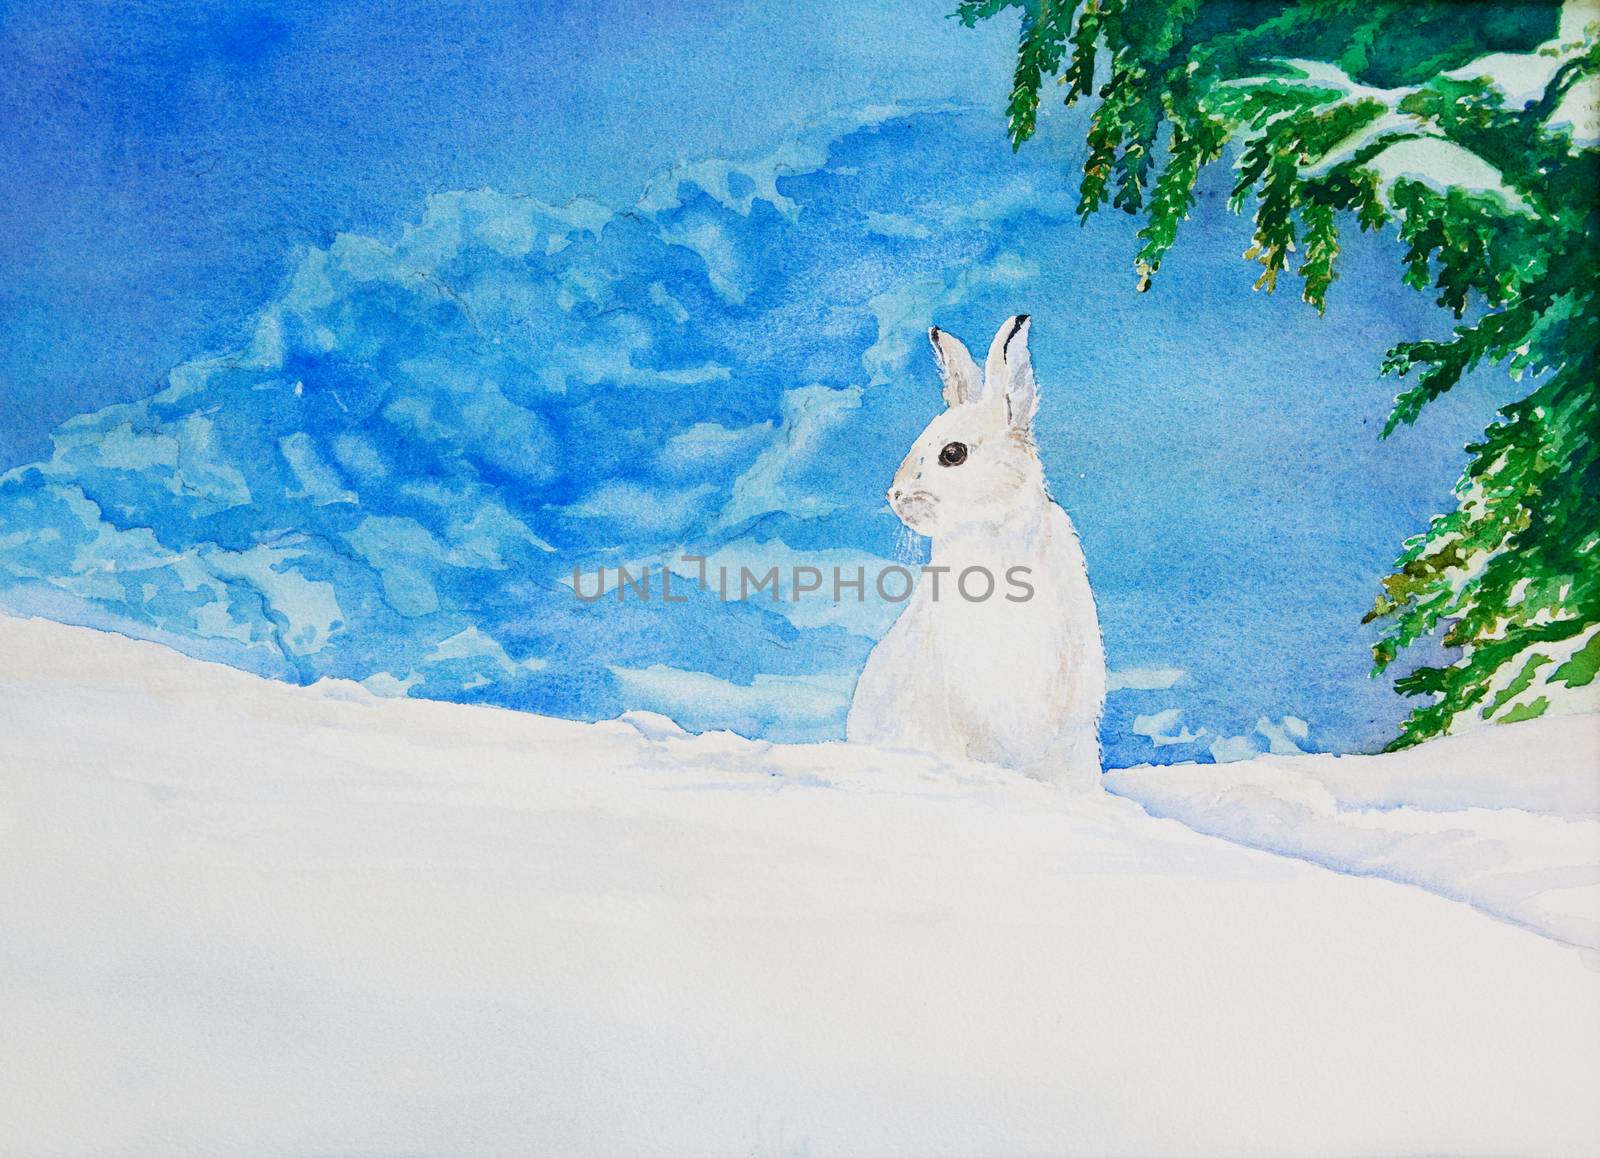 Thumper by songbird839